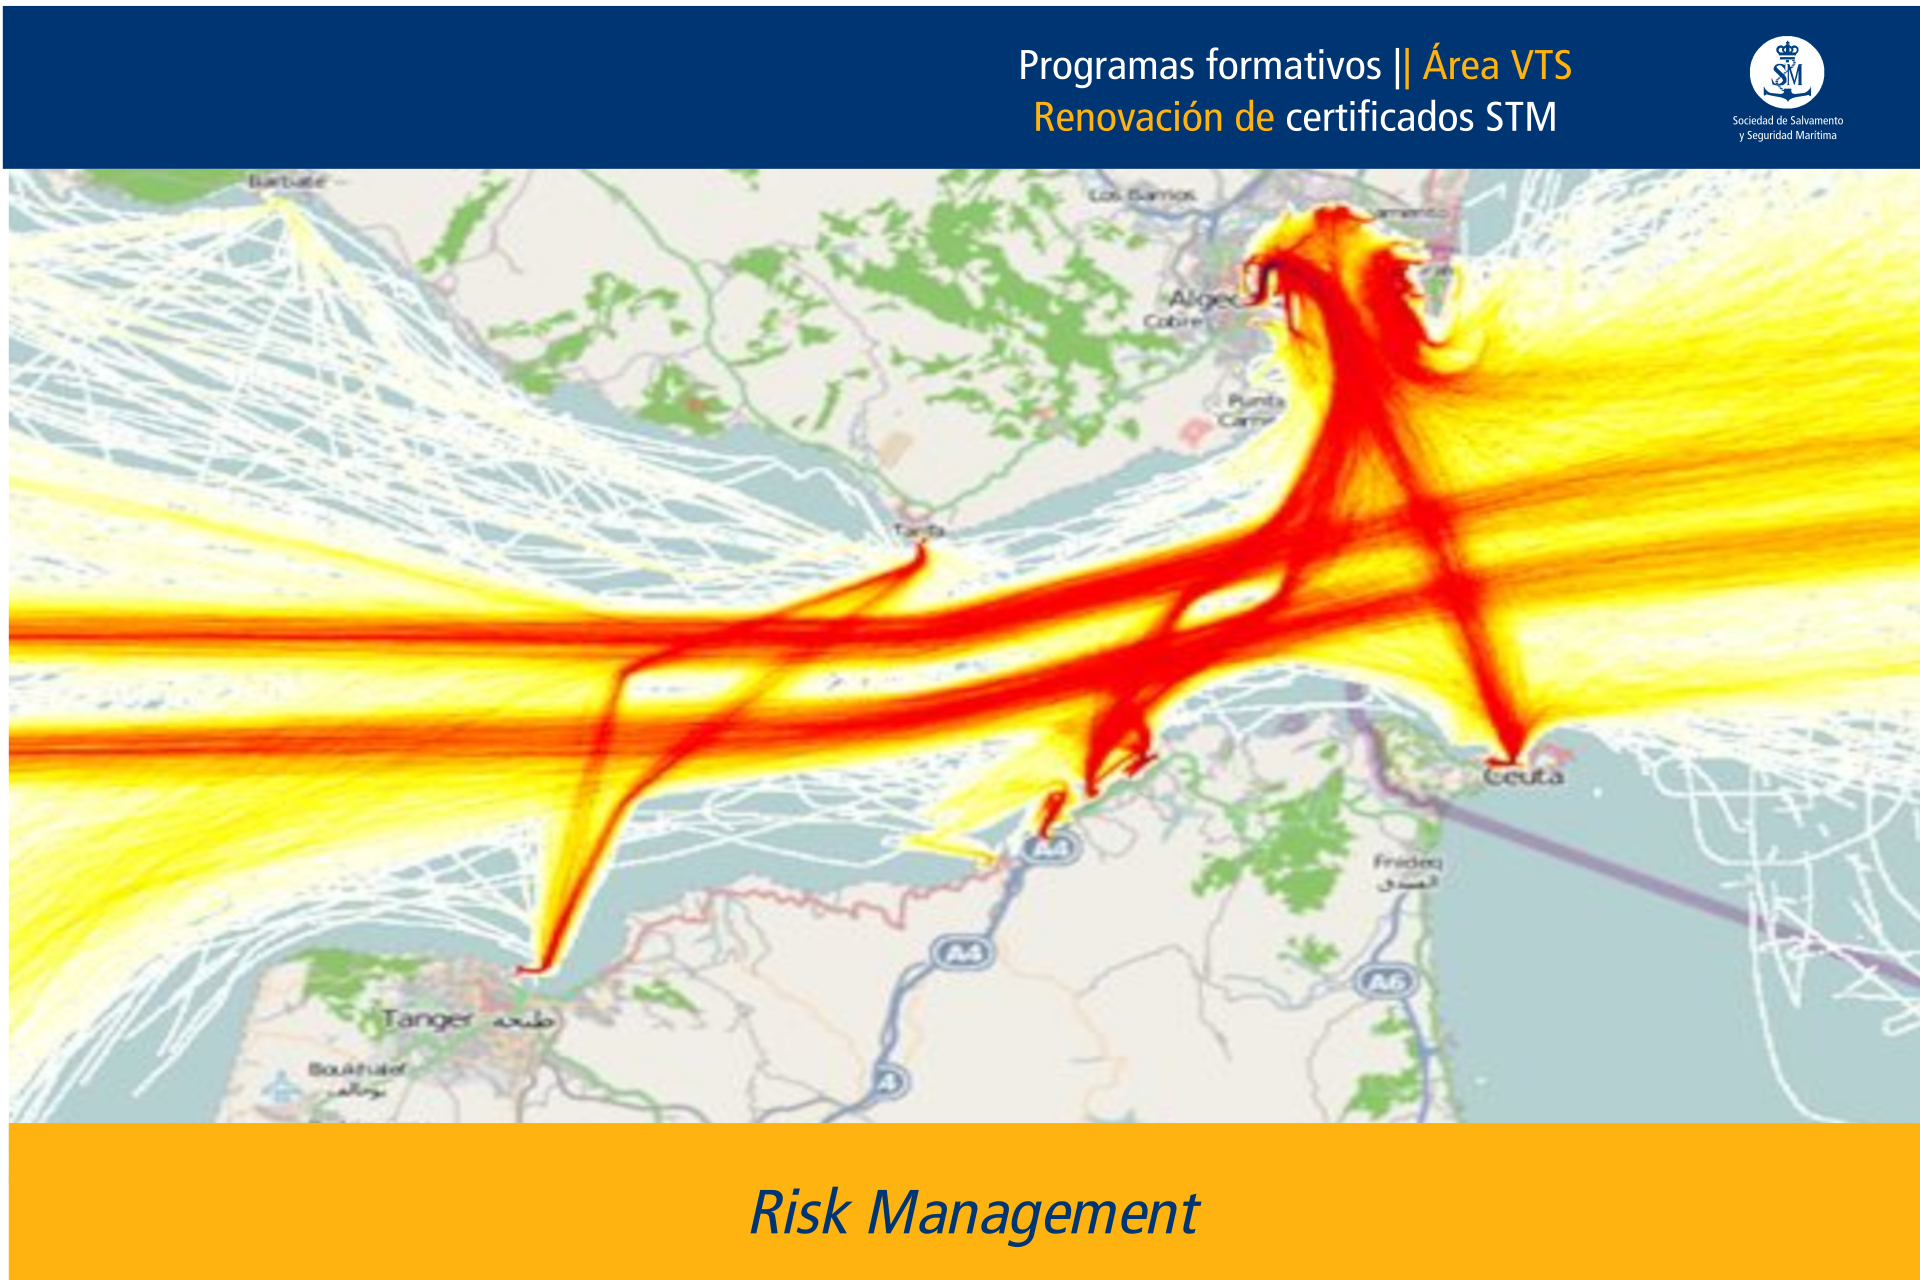 Risk Management. Análisis del riesgo